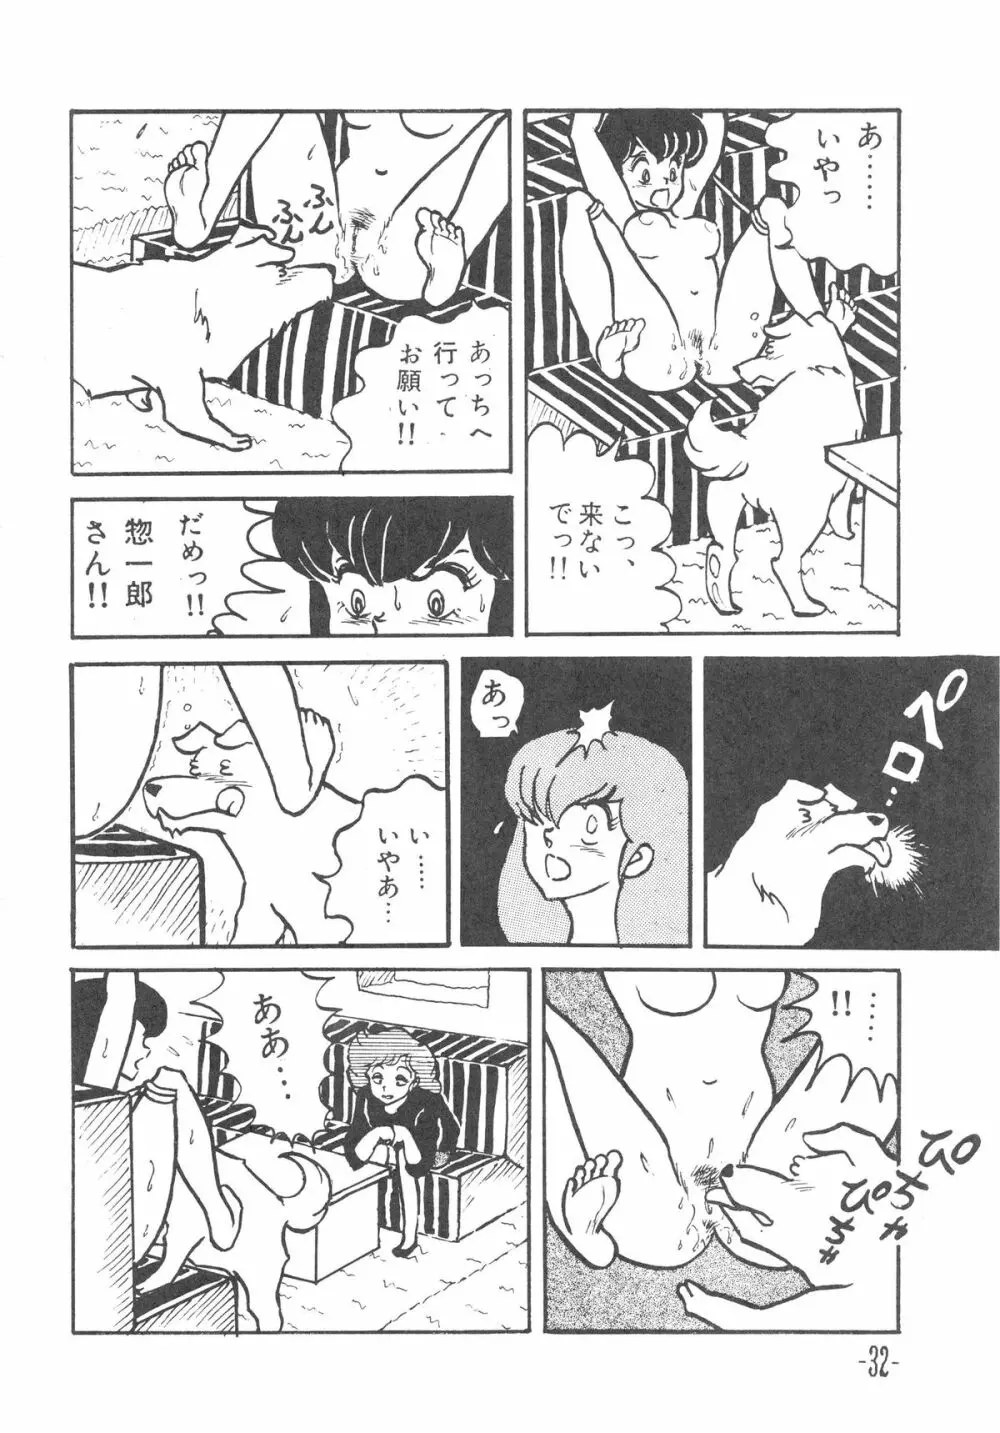 MIBOJIN GESHUKU 1 & 2 32ページ